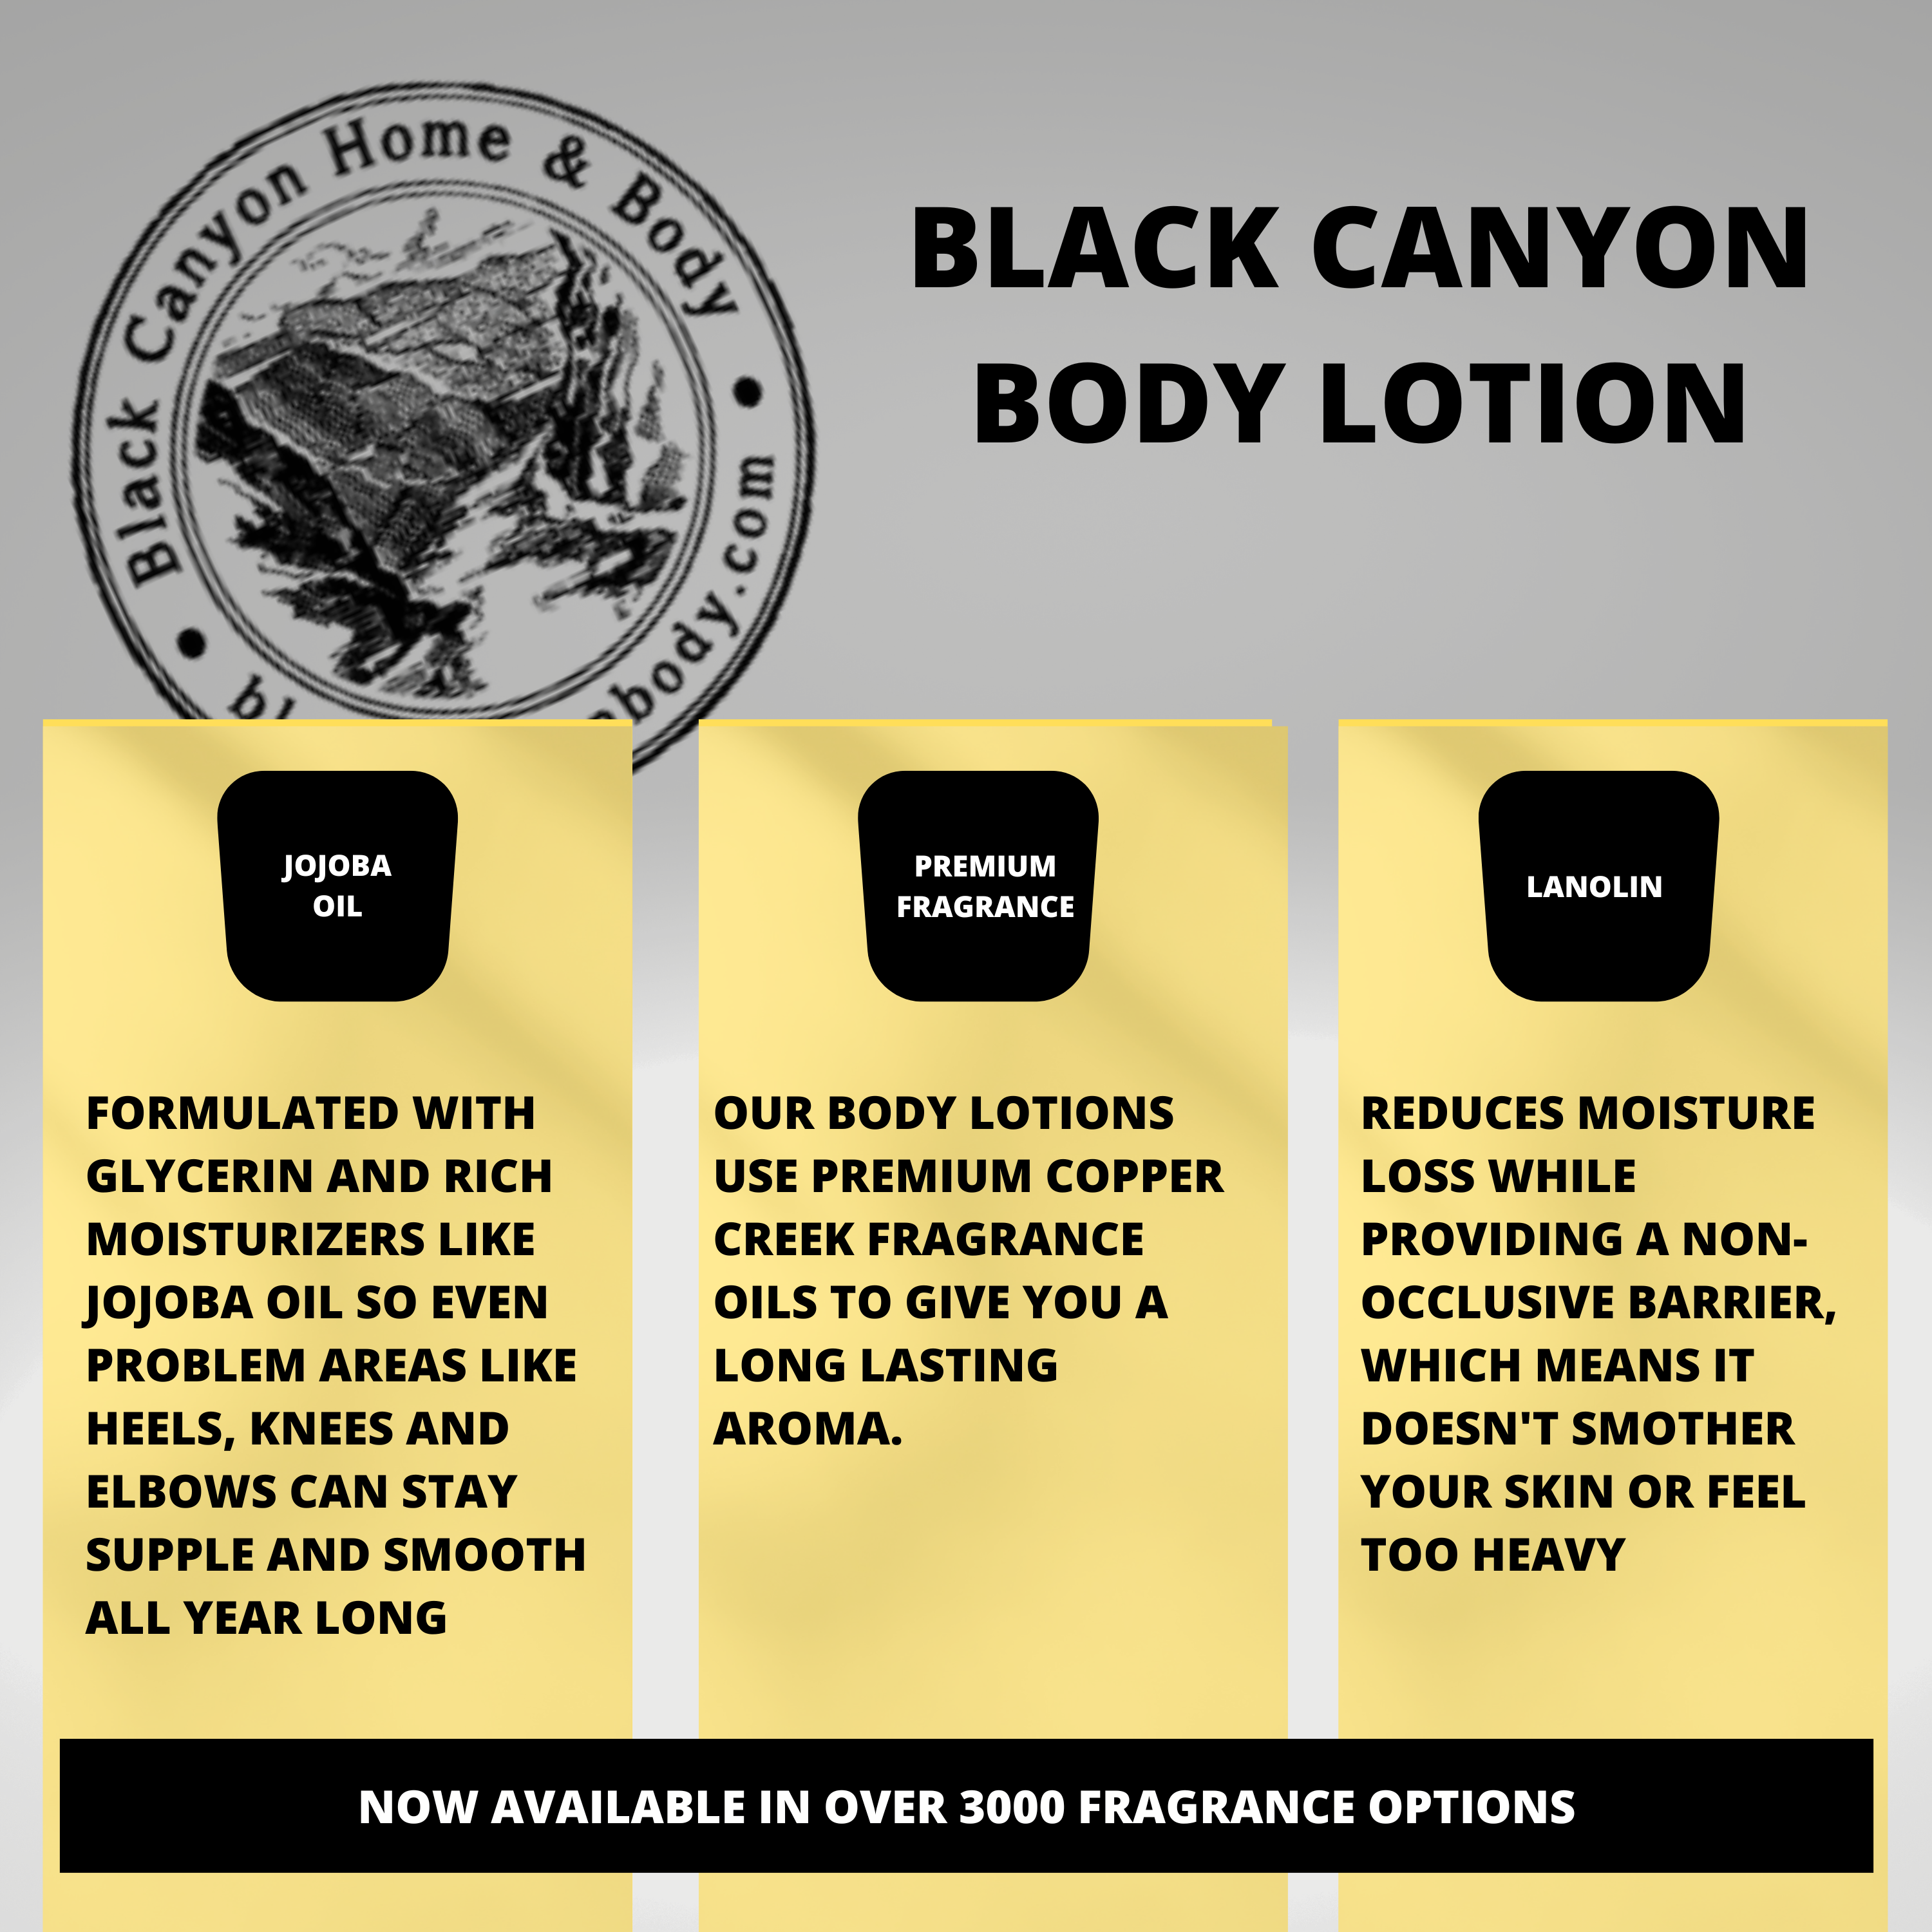 Black Canyon Eucalyptus Wintermint Scented Luxury Body Lotion with Lanolin and Jojoba Oil